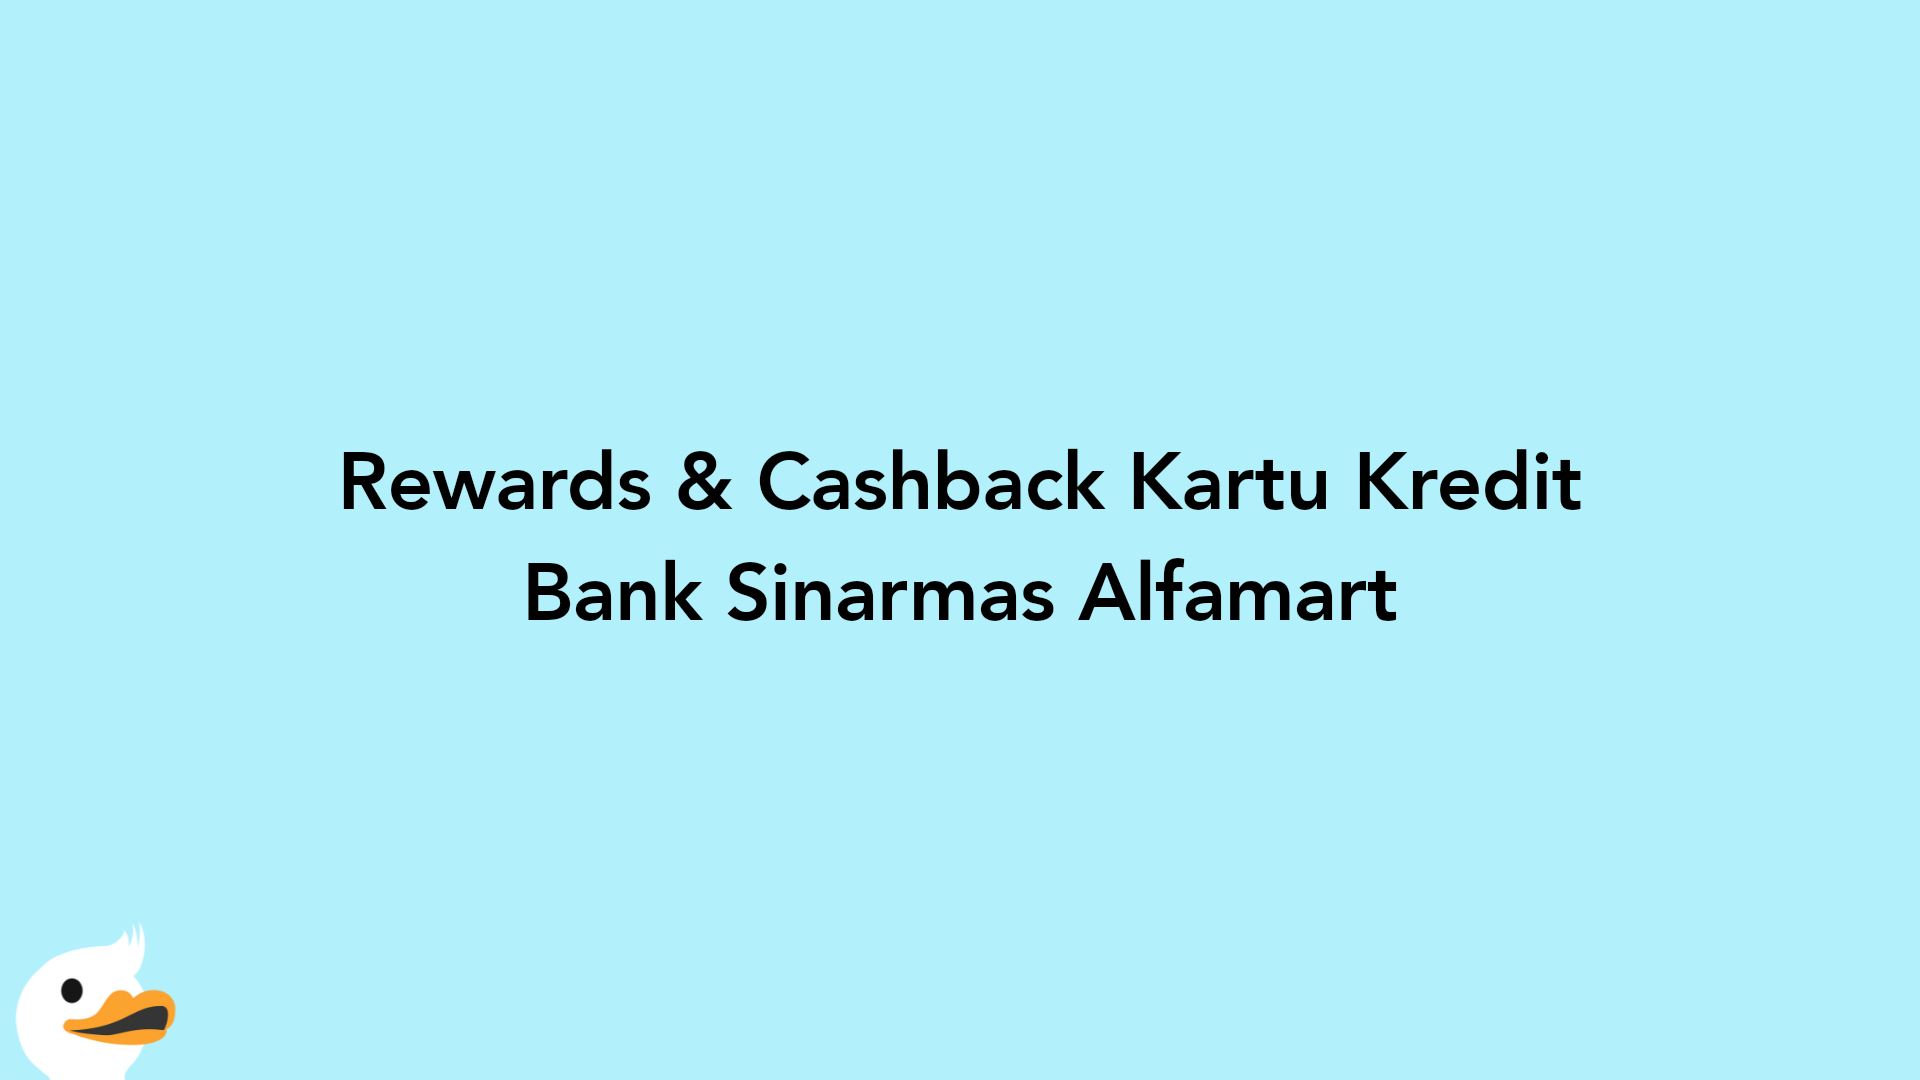 Rewards & Cashback Kartu Kredit Bank Sinarmas Alfamart